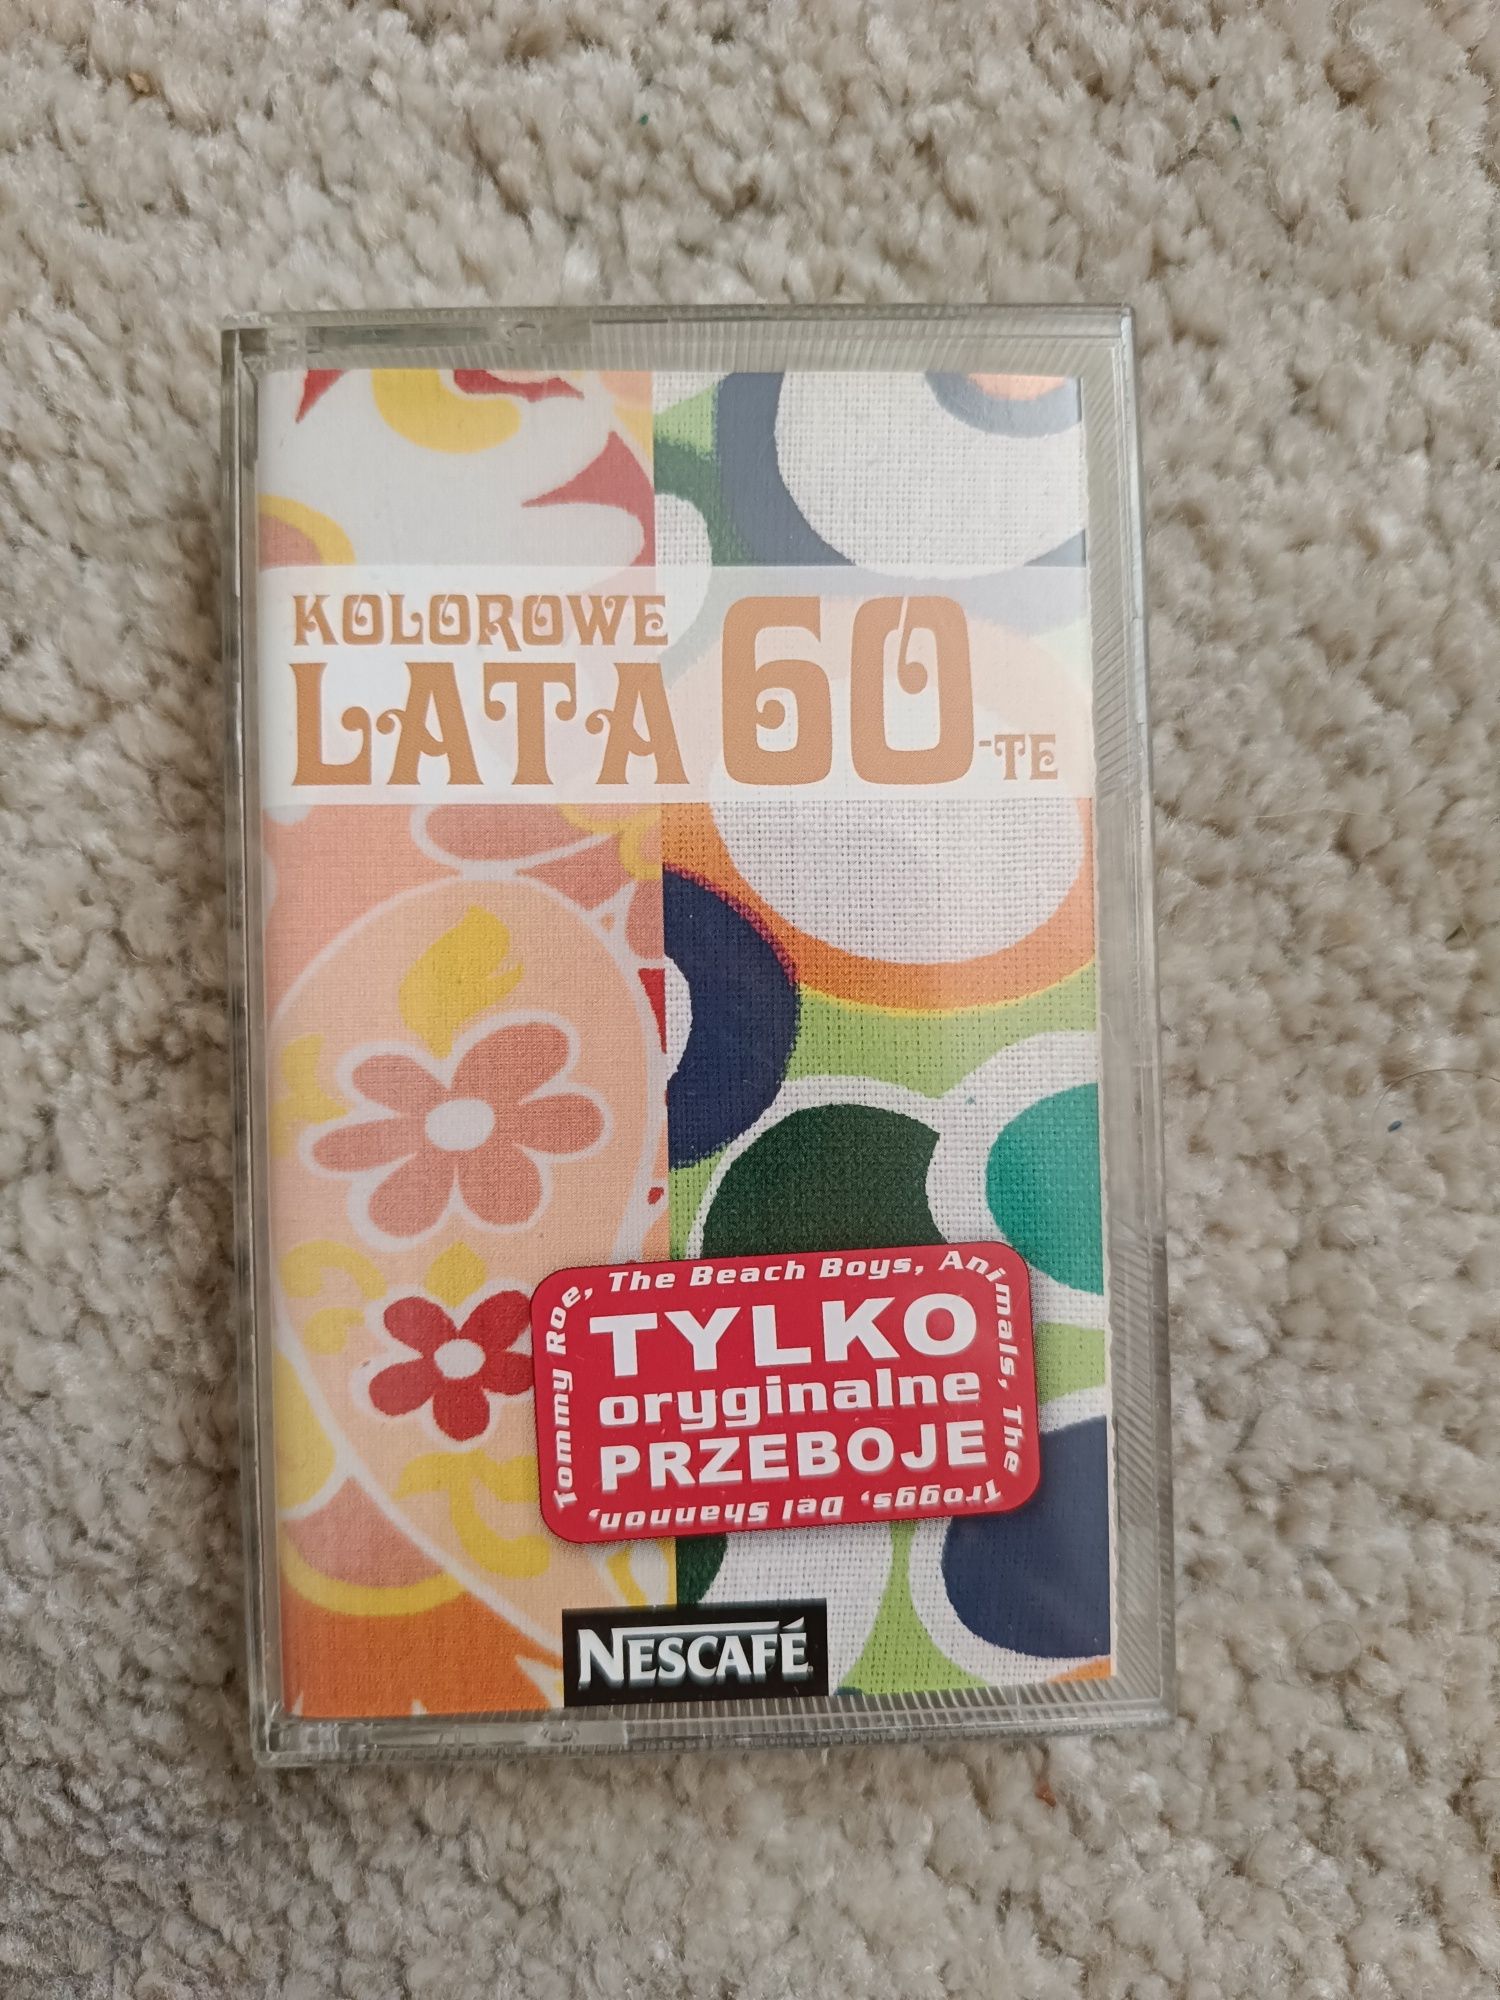 Nescafe kaseta magnetofonowa Kolorowe lata 60te